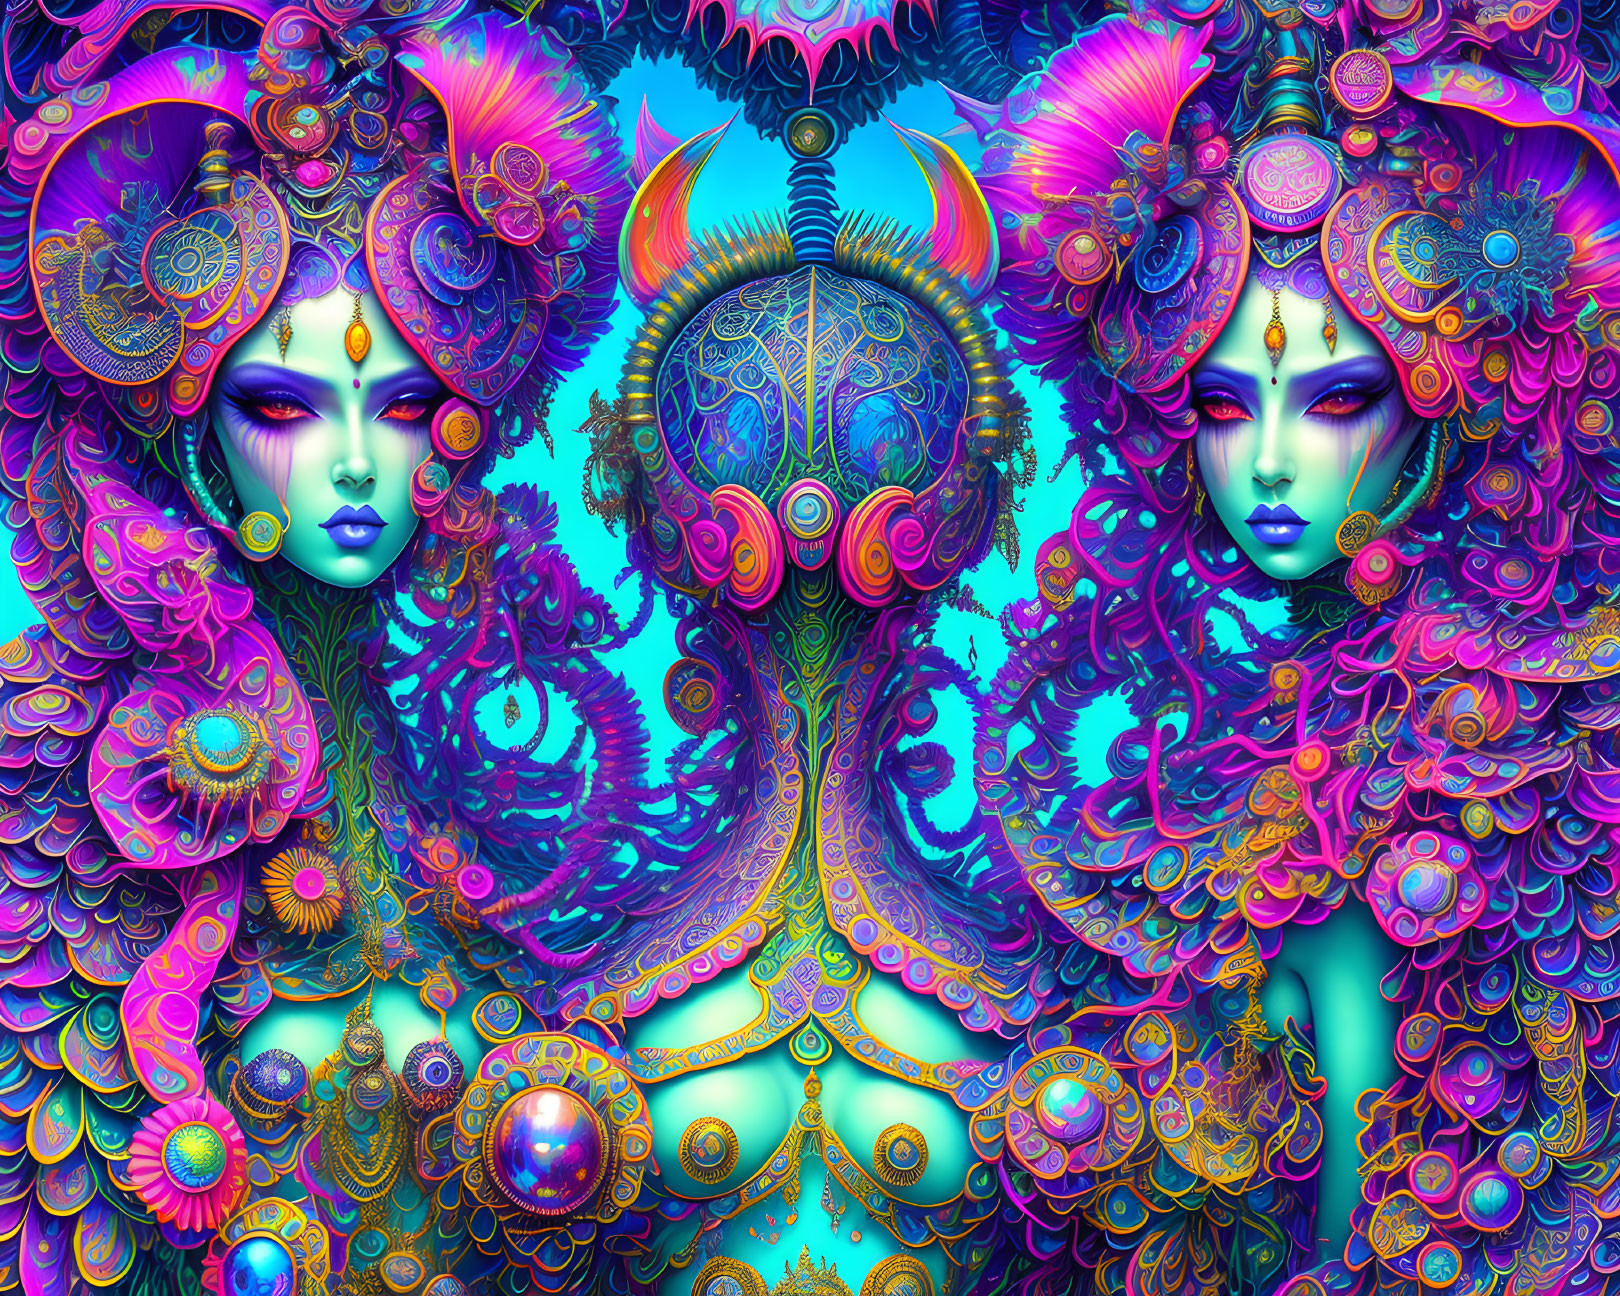 Symmetrical female figures in vibrant psychedelic artwork